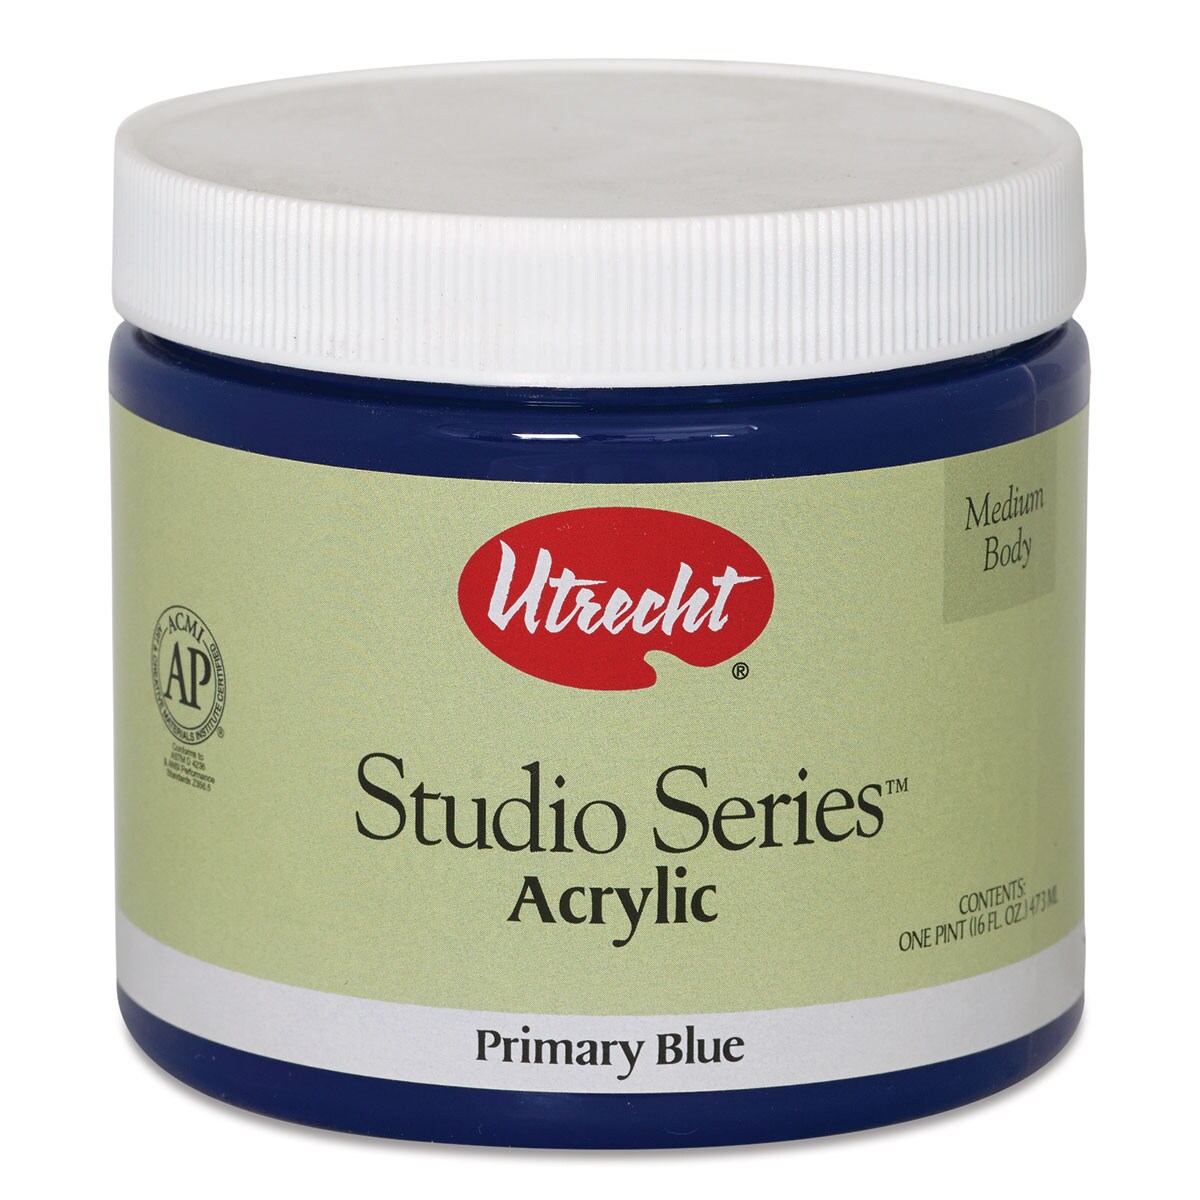 Utrecht Studio Series Acrylic Paint - Primary Blue, Pint